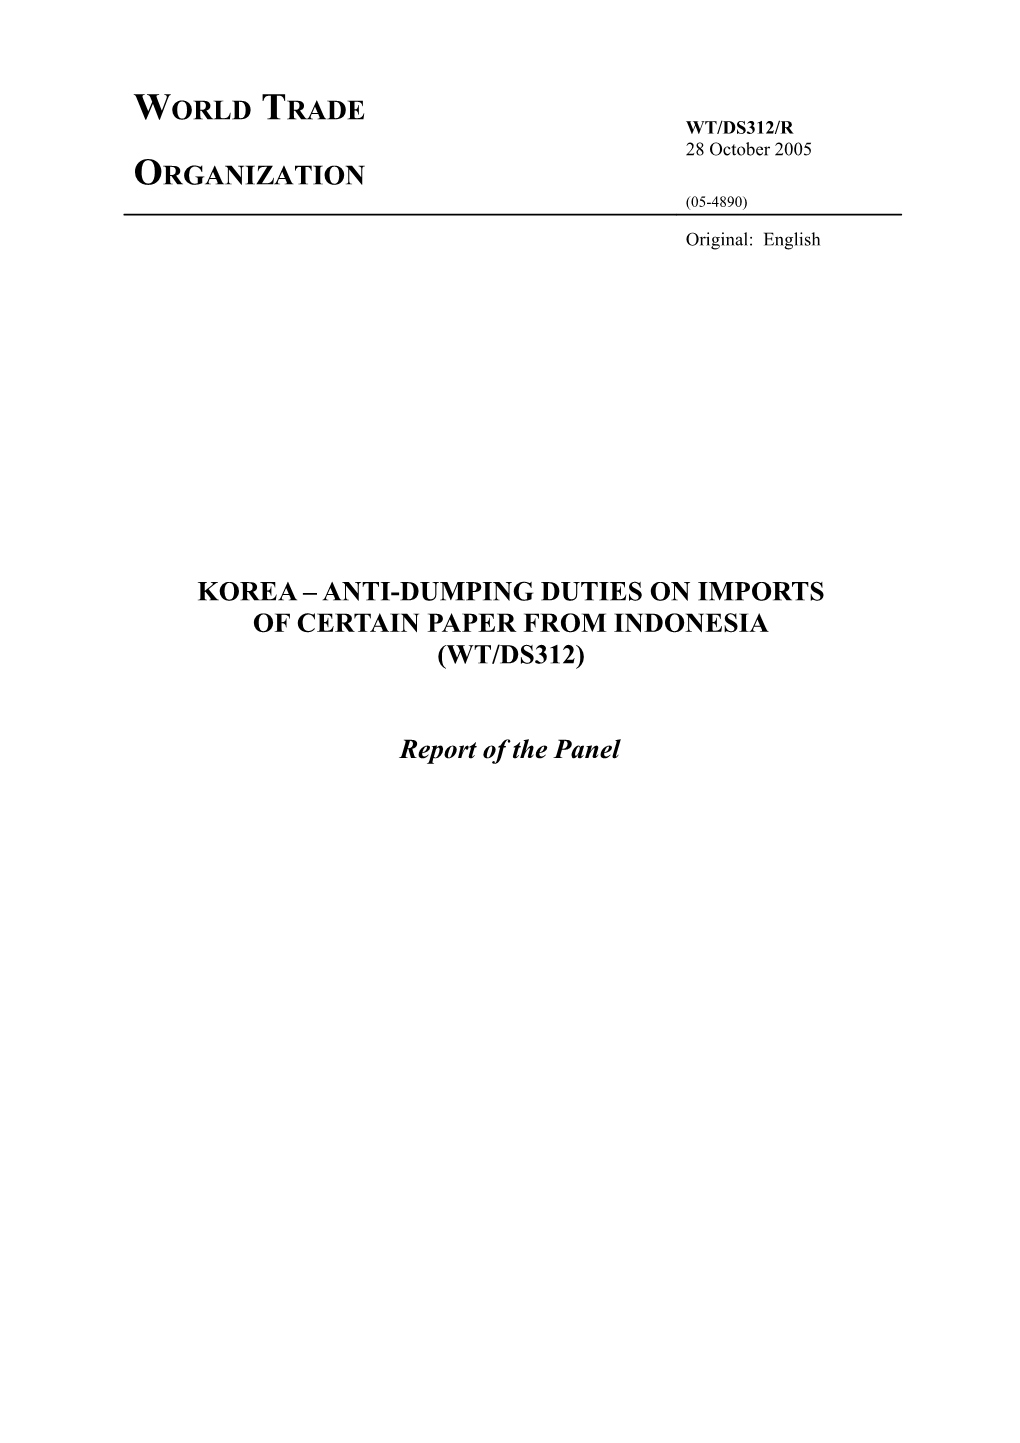 Korea Anti-Dumping Duties on Imports